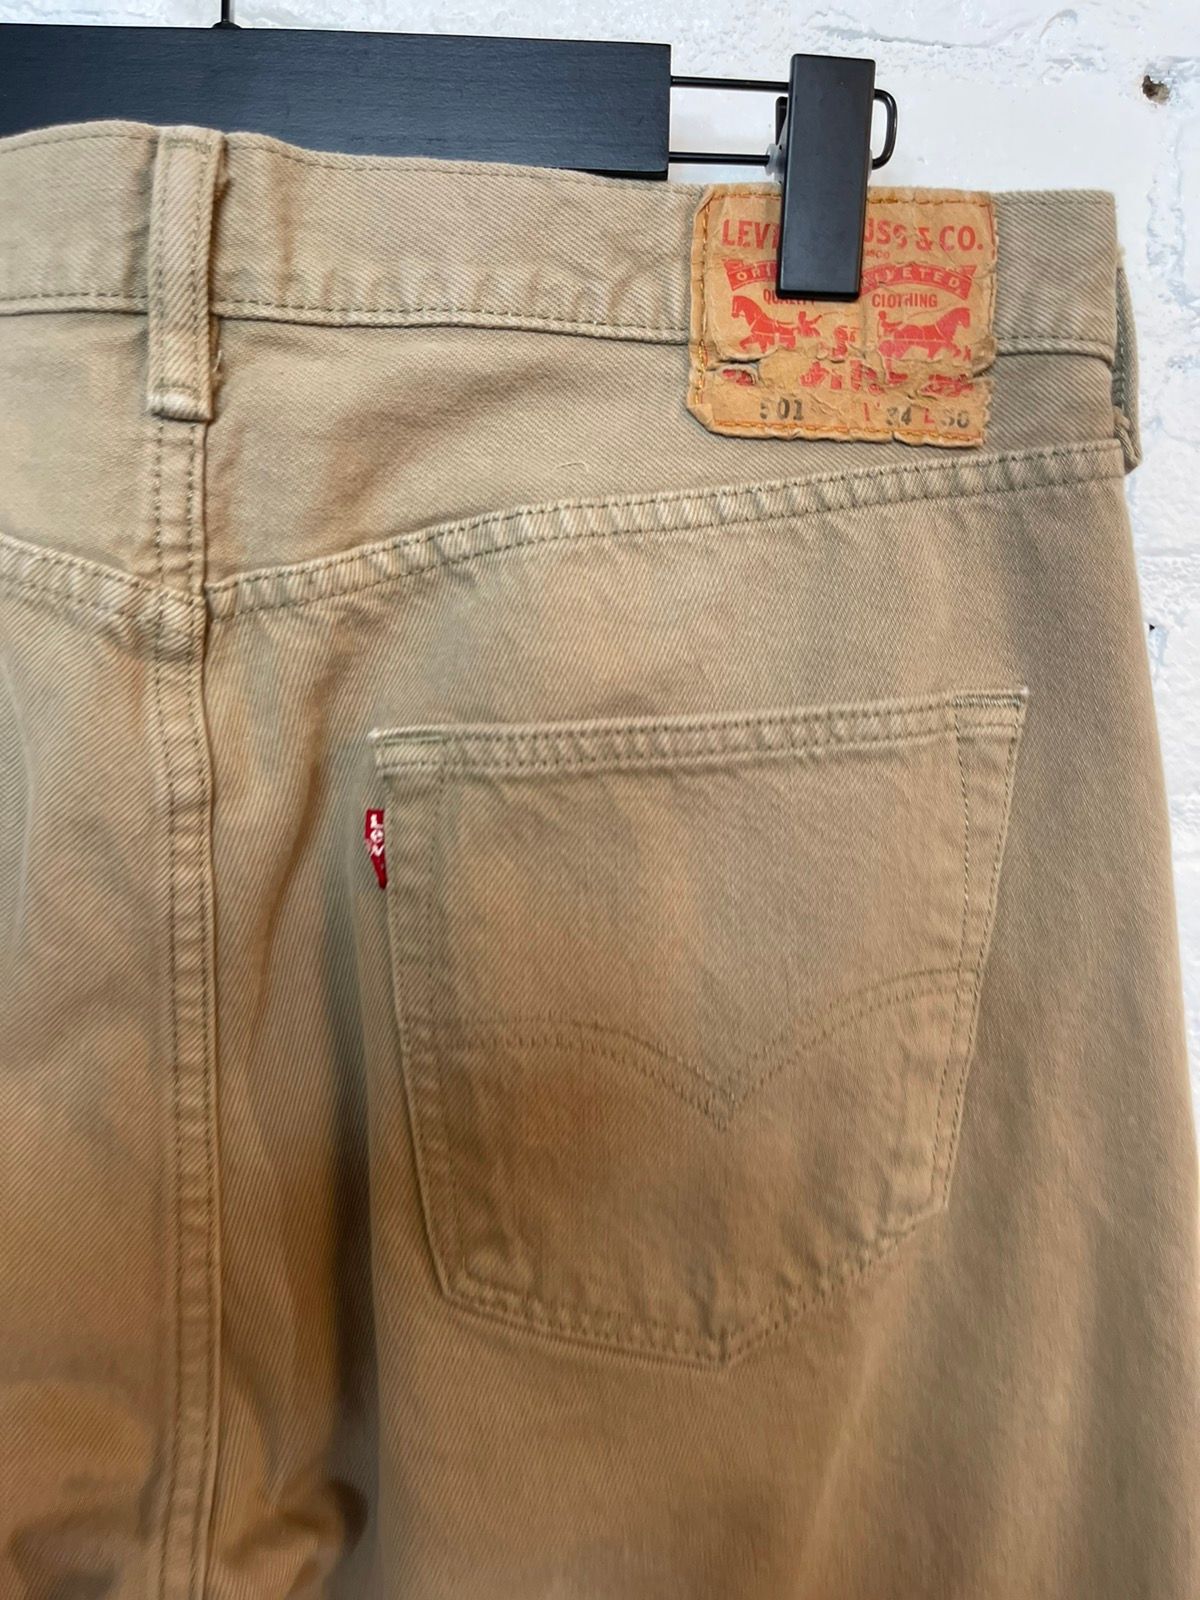 Rare Vintage Tan Levi Jeans Baggy Skate STYLE